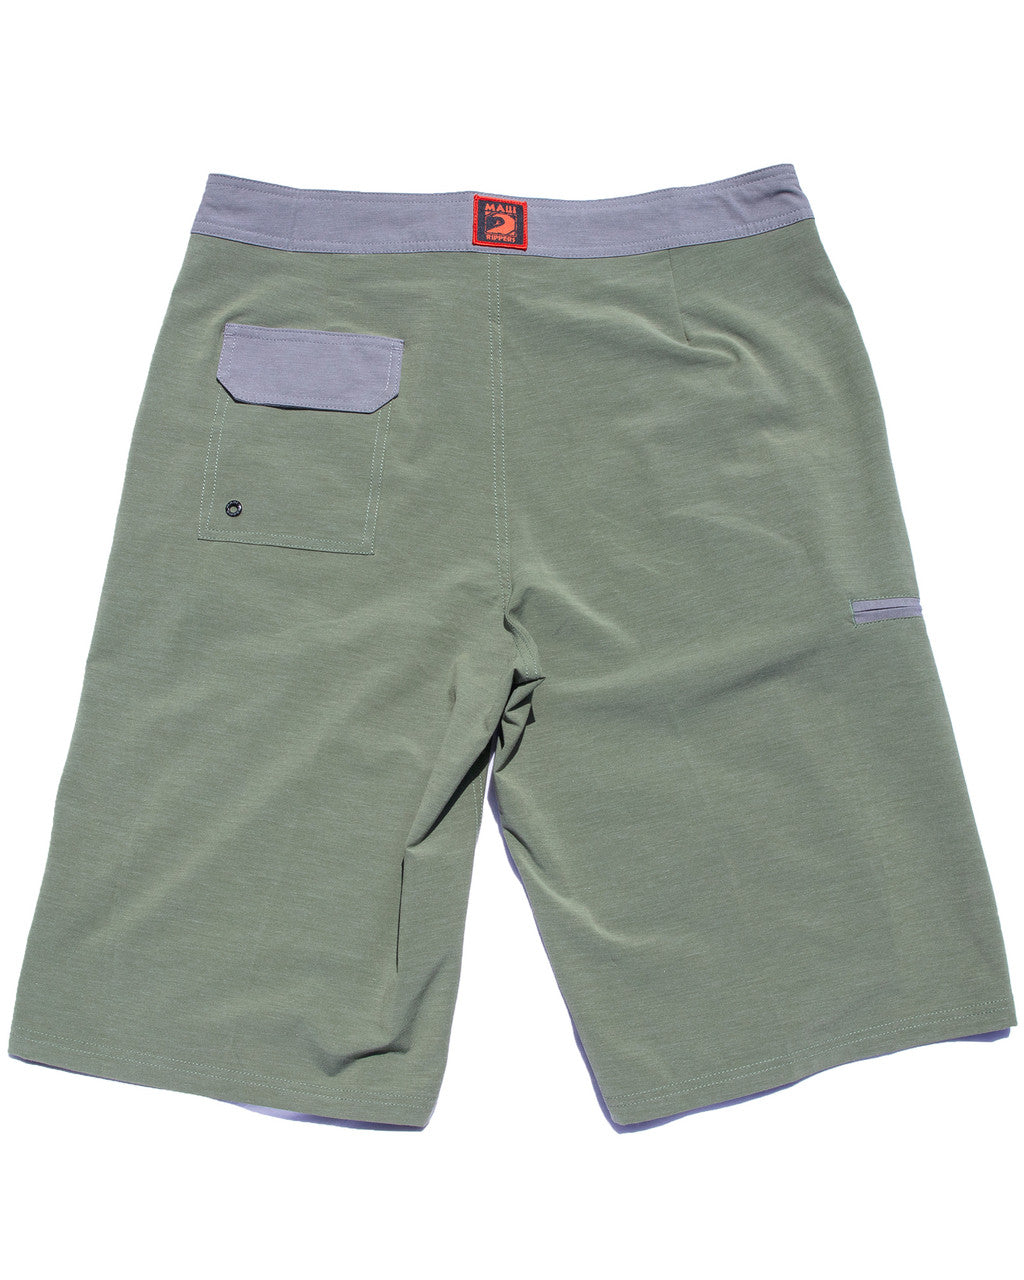 Maui Rippers Mens 21 Olive Slash Pockets Hybrid Board Walkshort Size 38